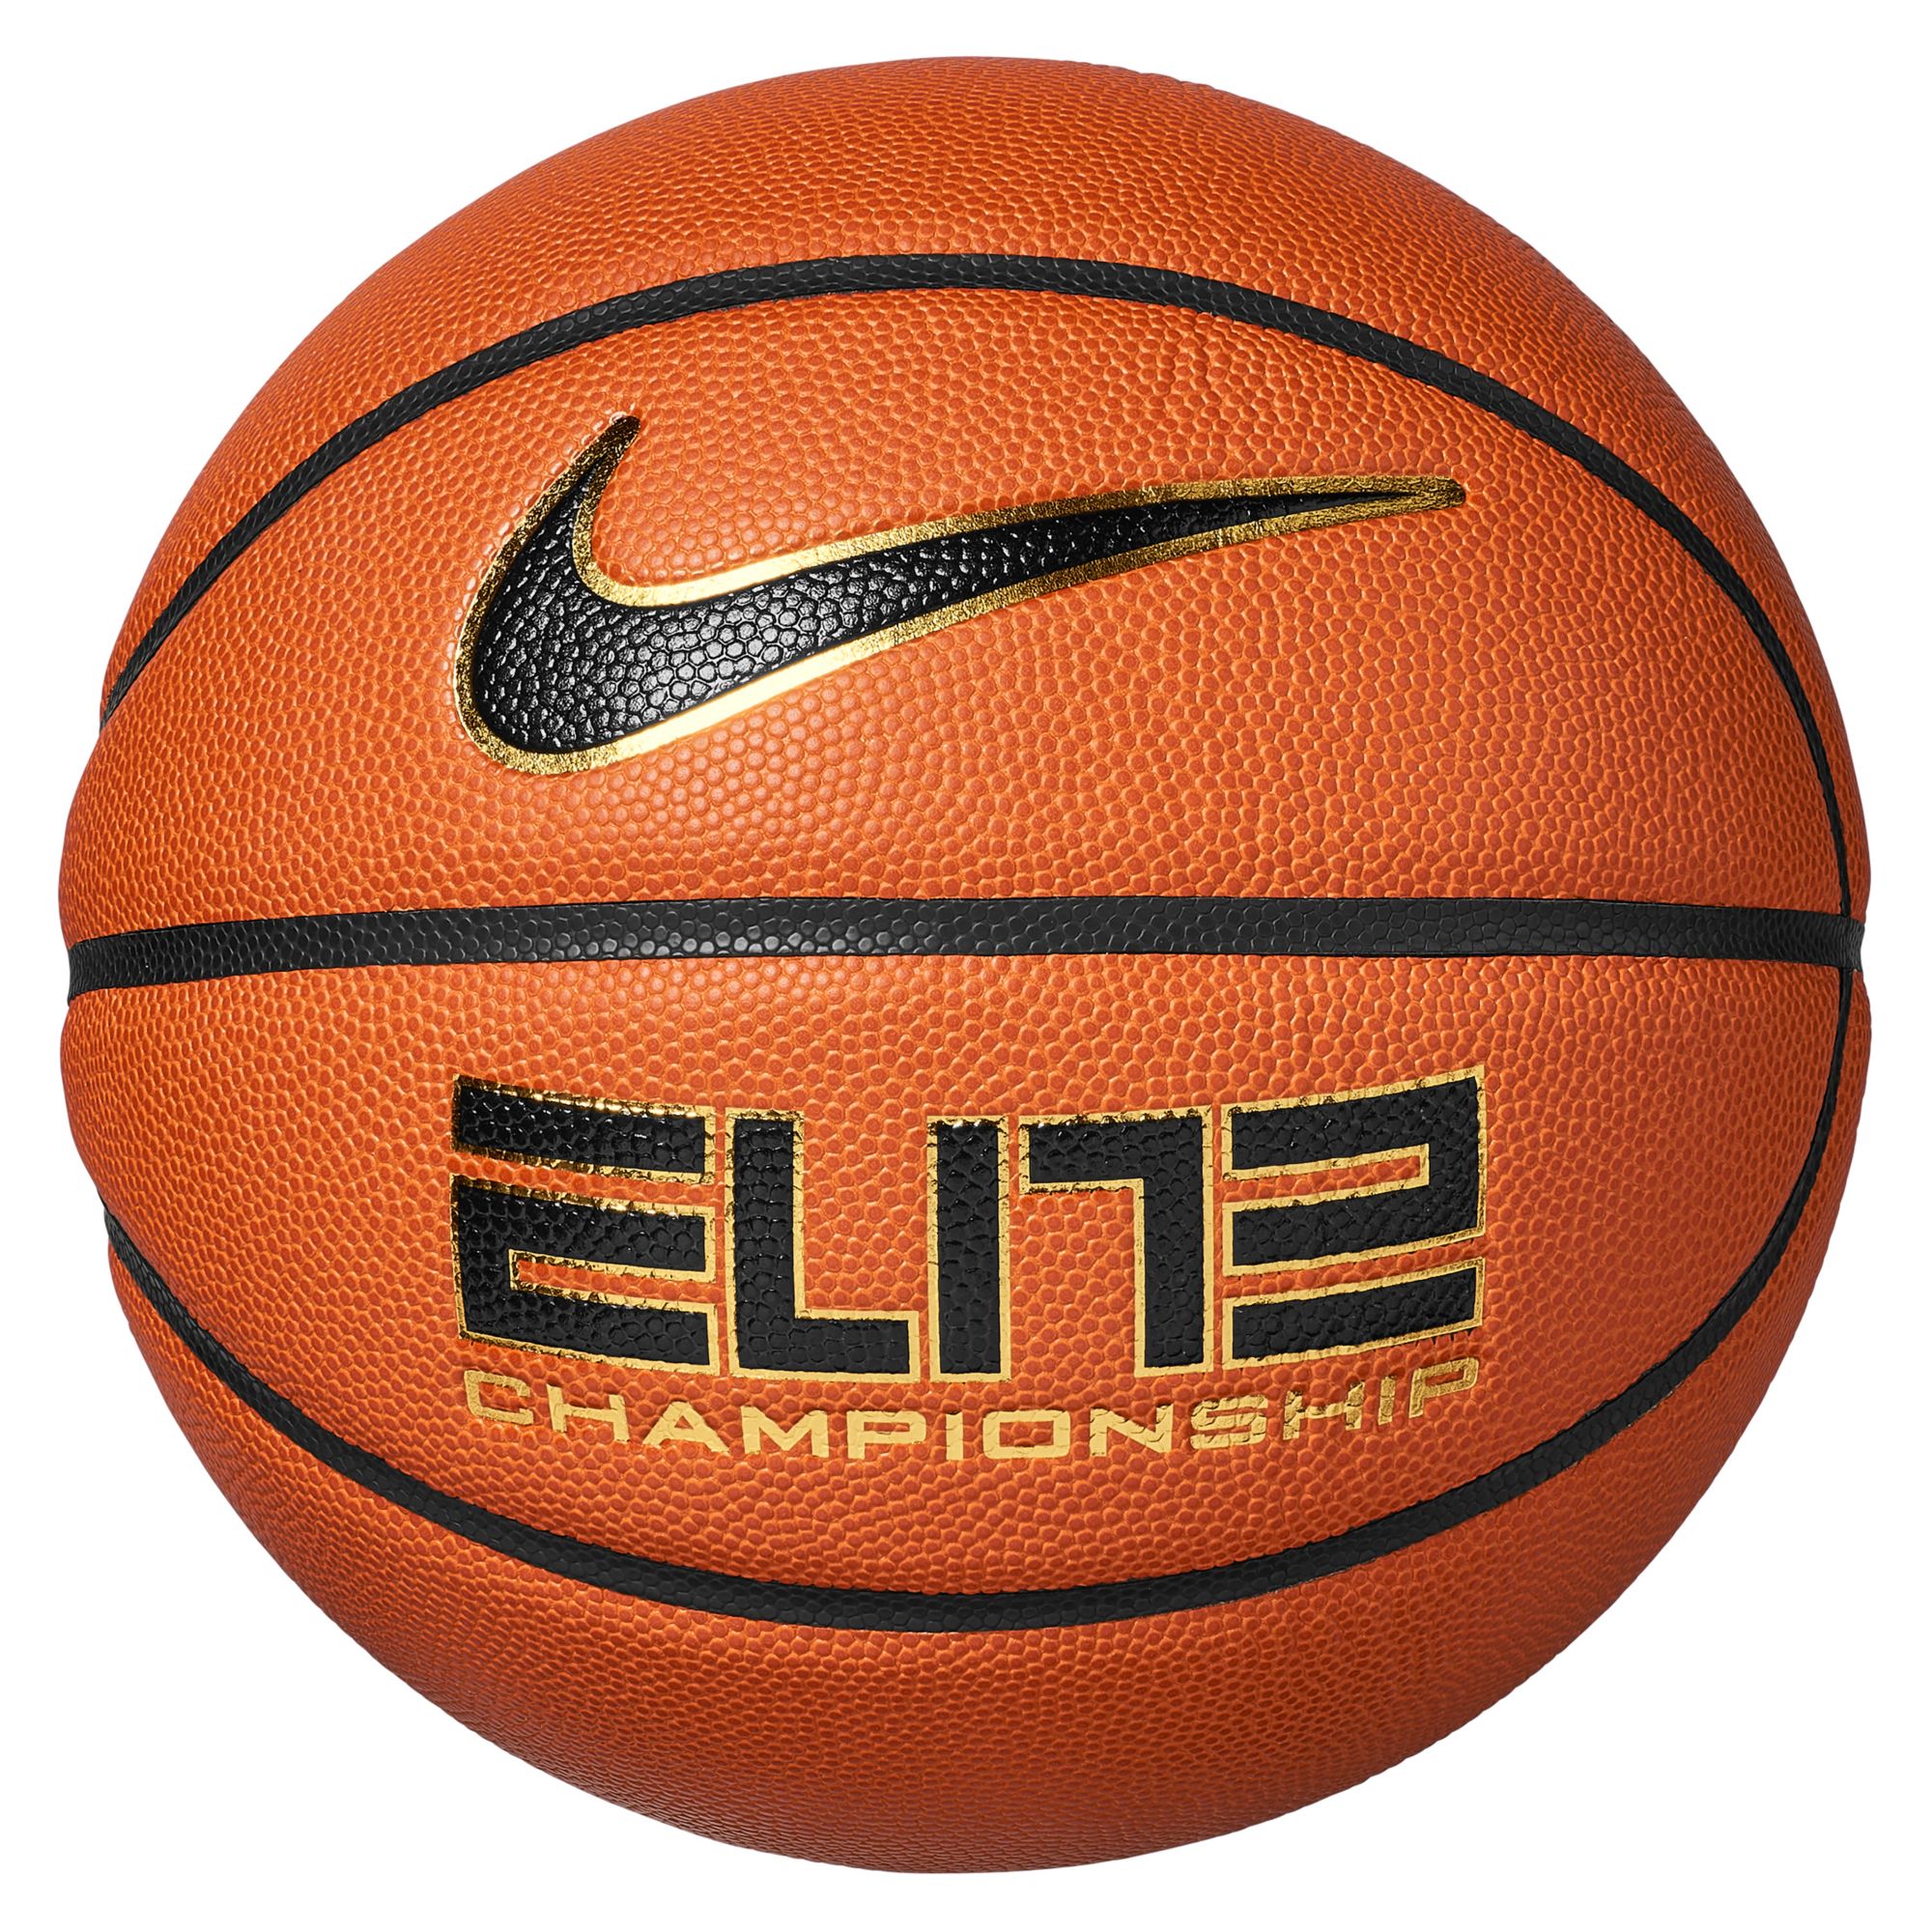 Nike Elite Championship 8P 2.0 Basketball NFHS Official Size